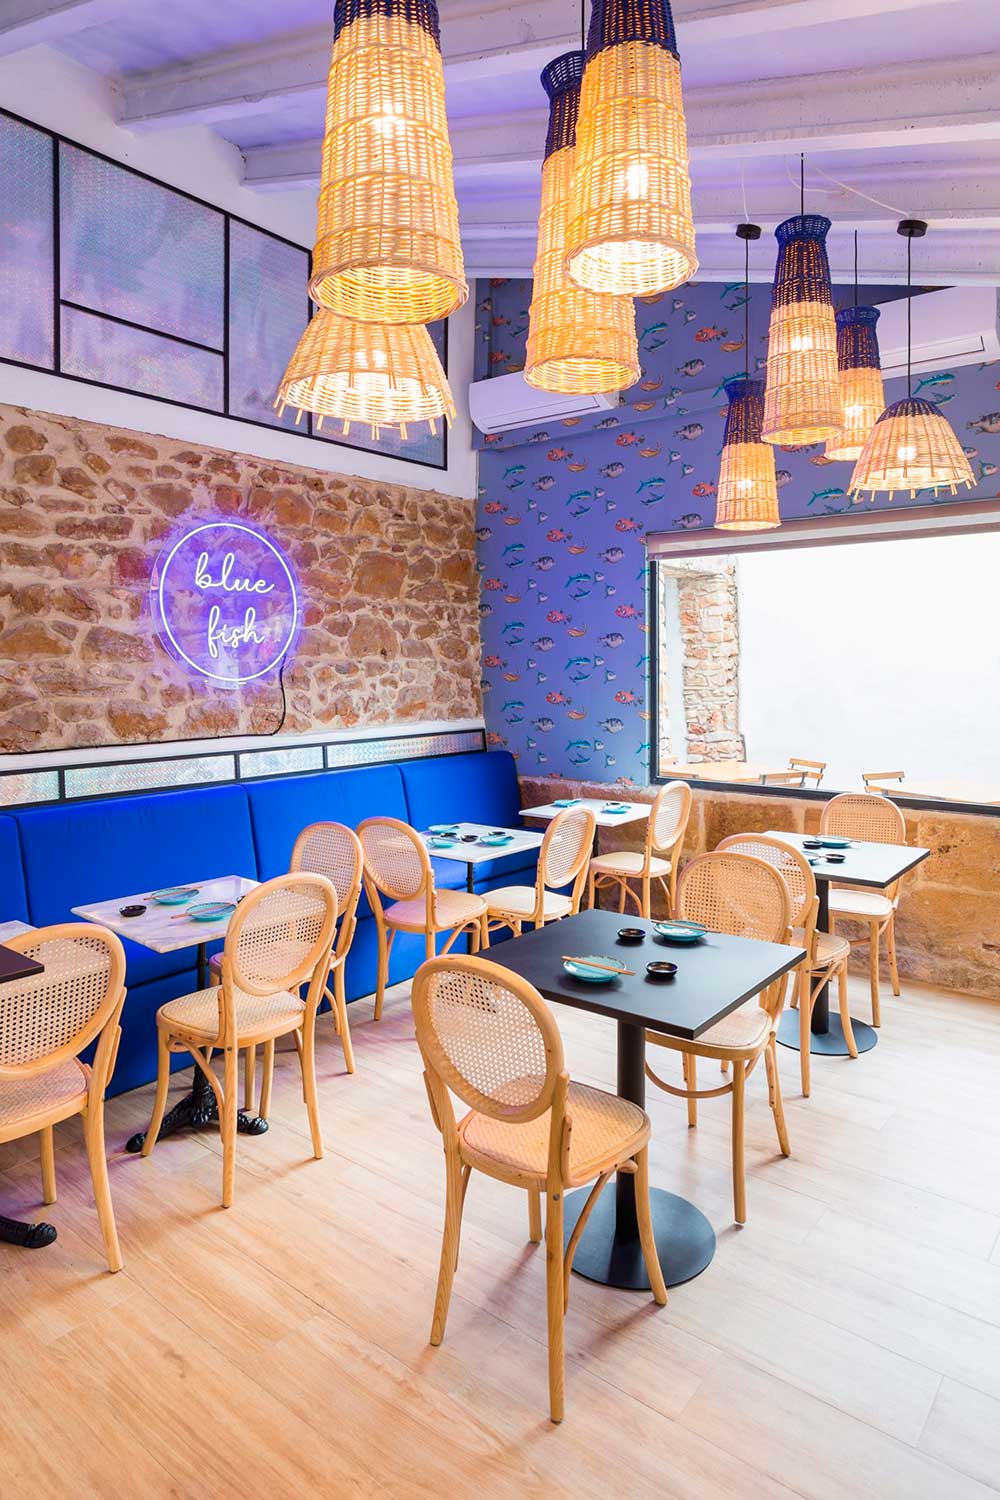 Mobilier Francisco Segarra restaurant Blue Fish.